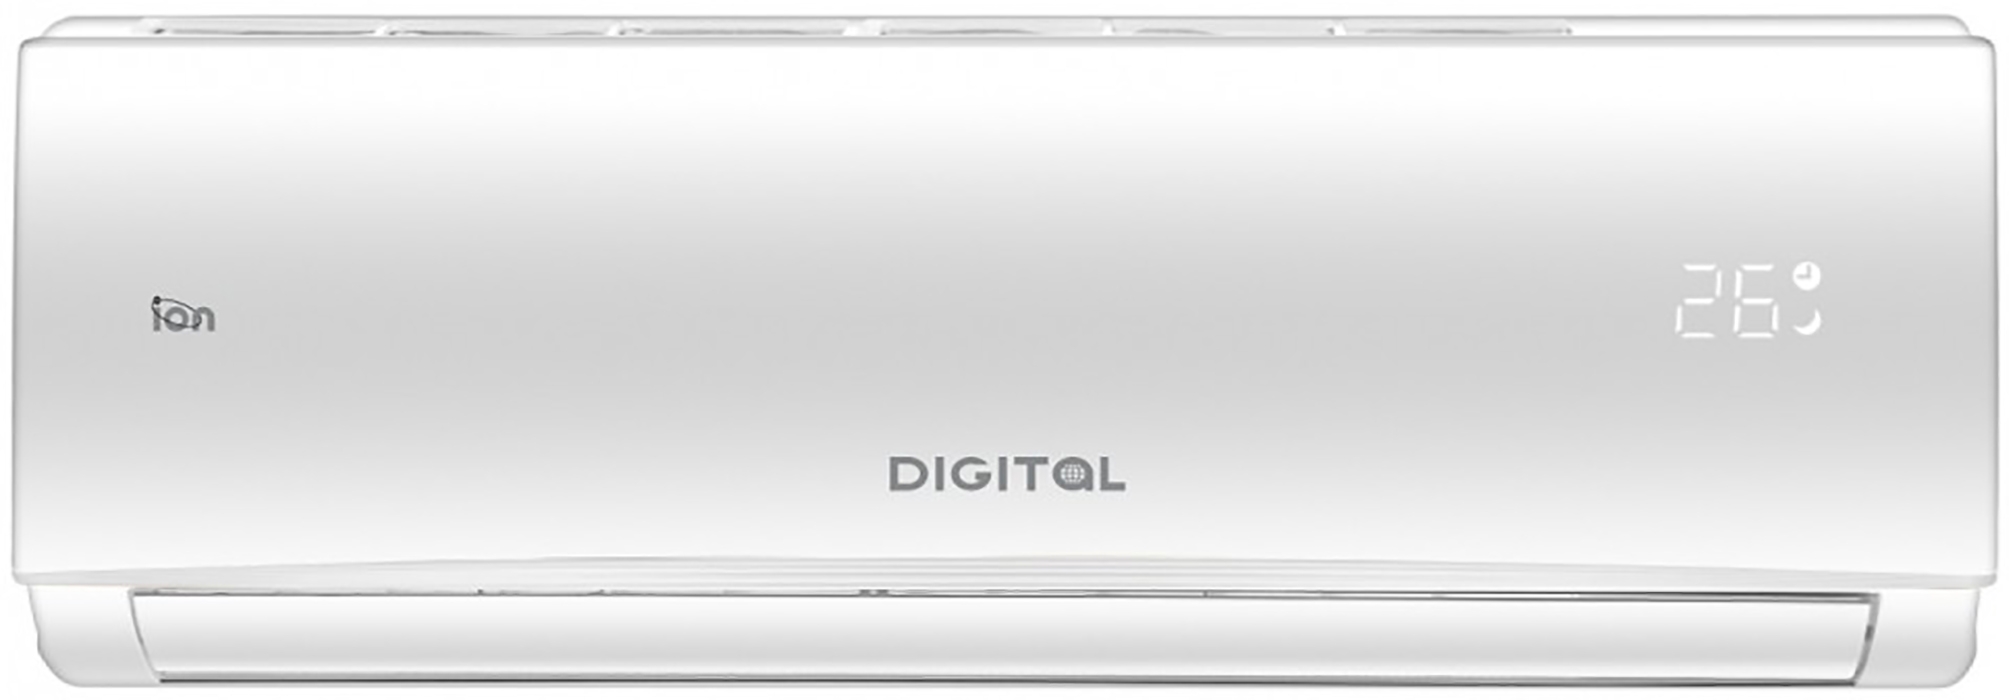 Кондиционер сплит-система Digital DAC-i09SW цена 0.00 грн - фотография 2